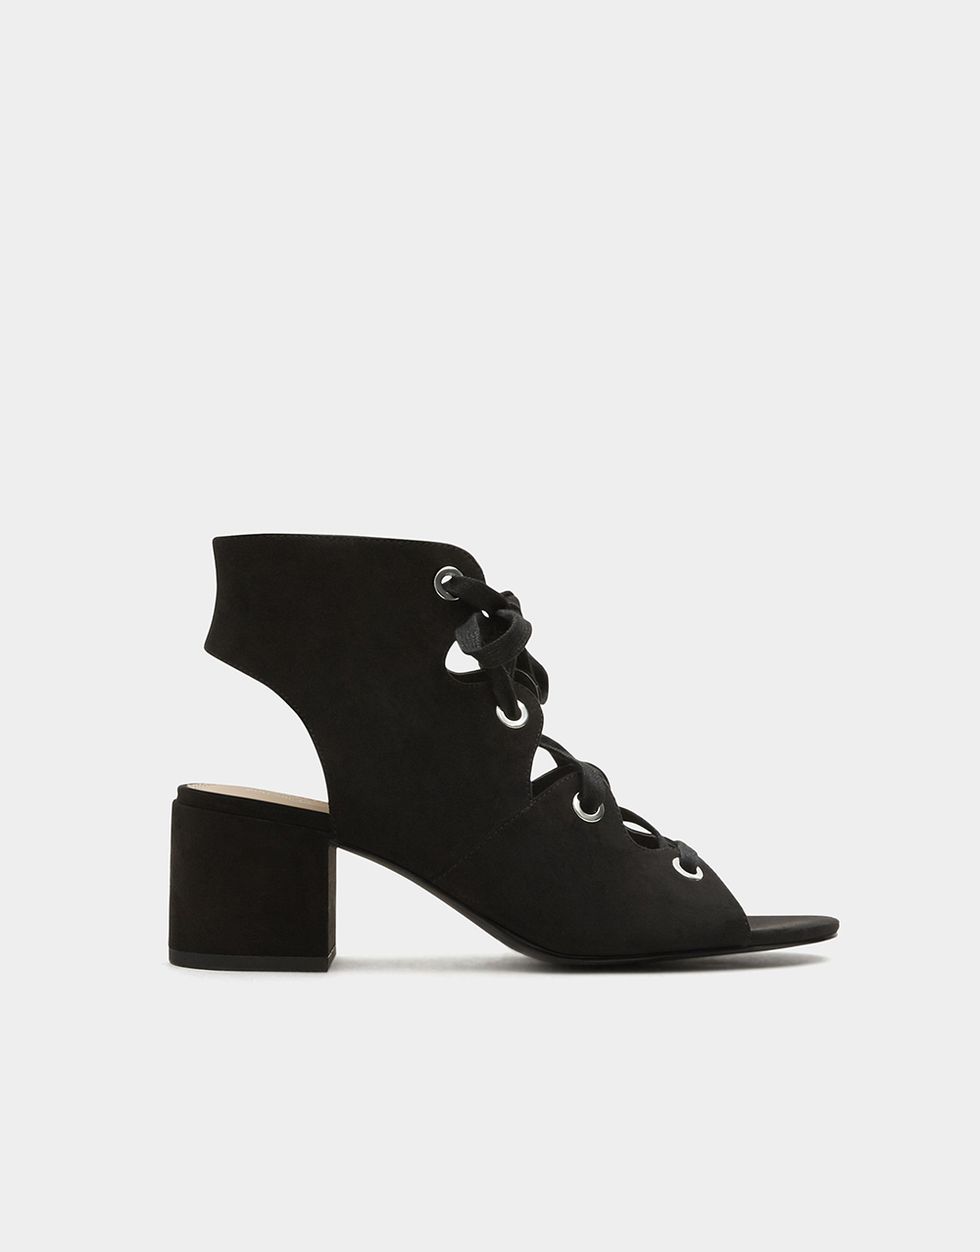 Footwear, Shoe, Black, Leather, High heels, Boot, 